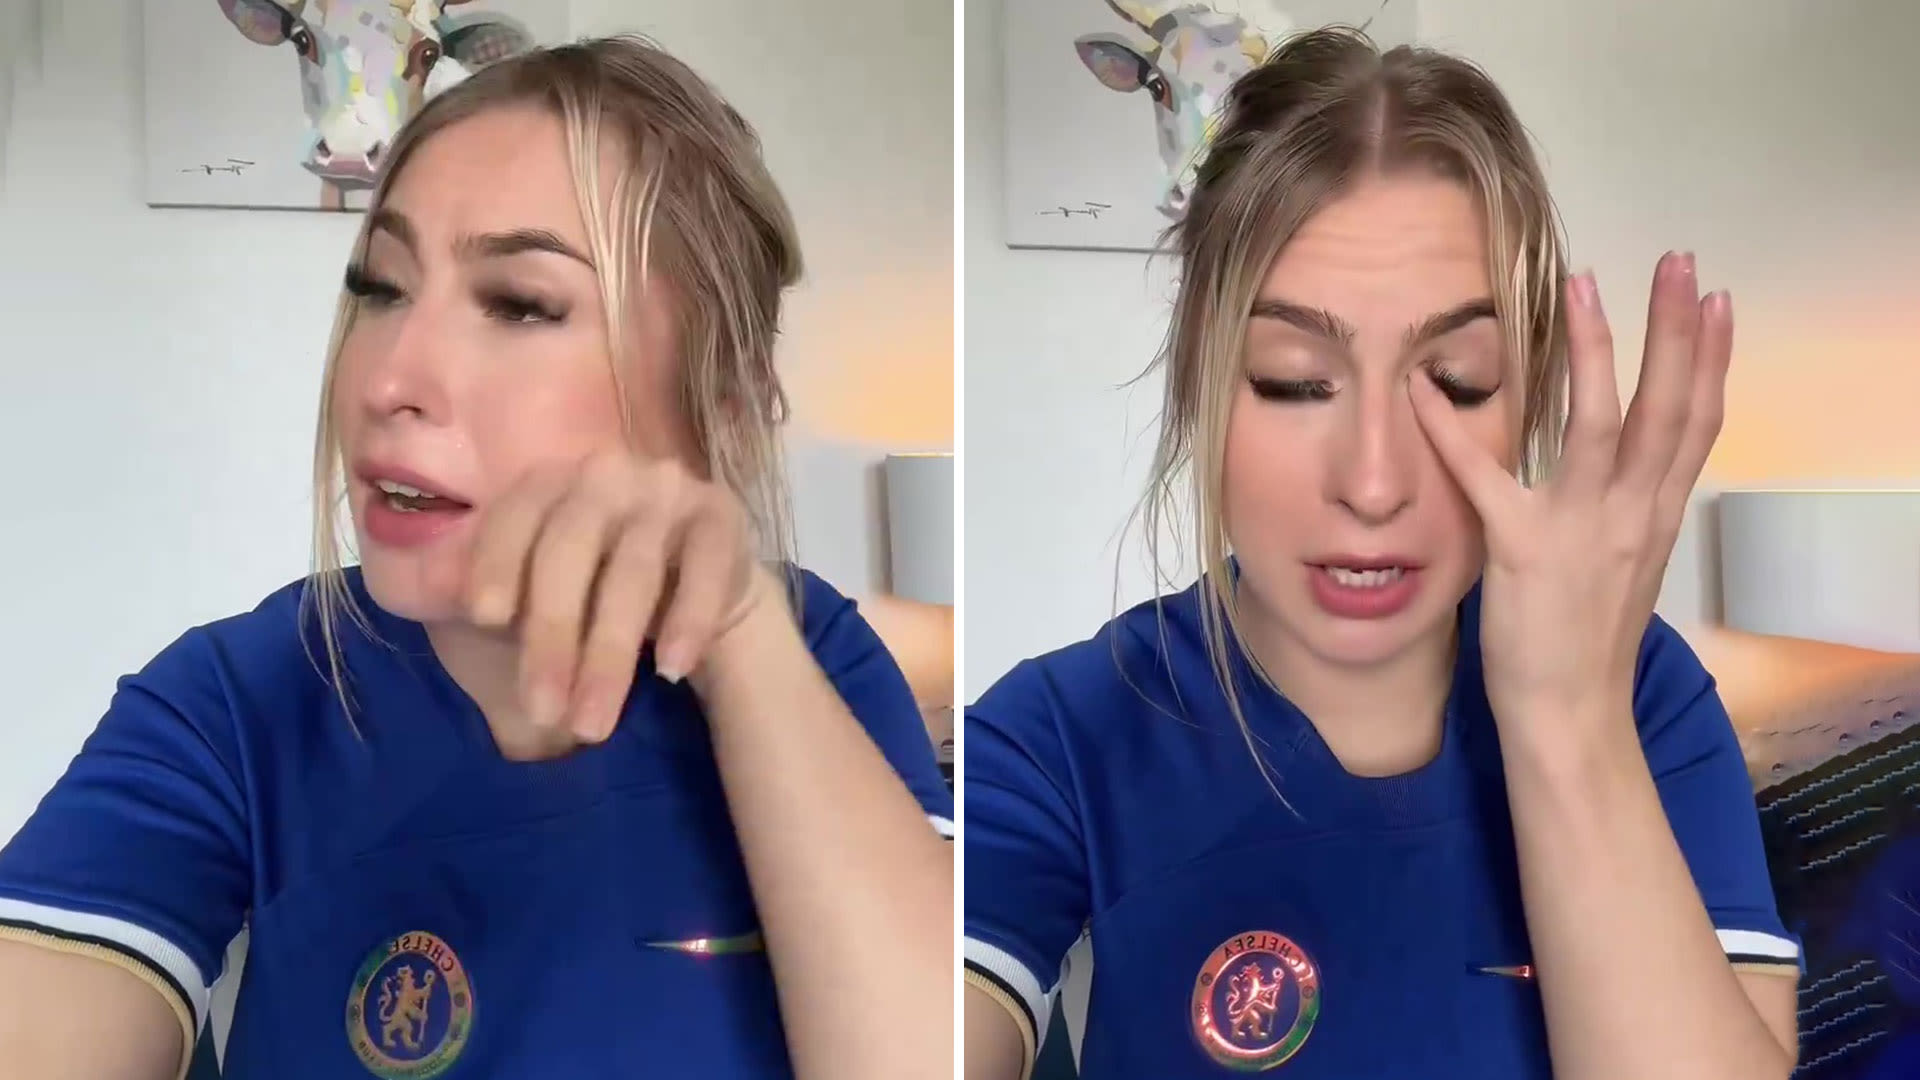 Astrid Wett breaks down in tears in emotional video over exit of Chelsea 'daddy'